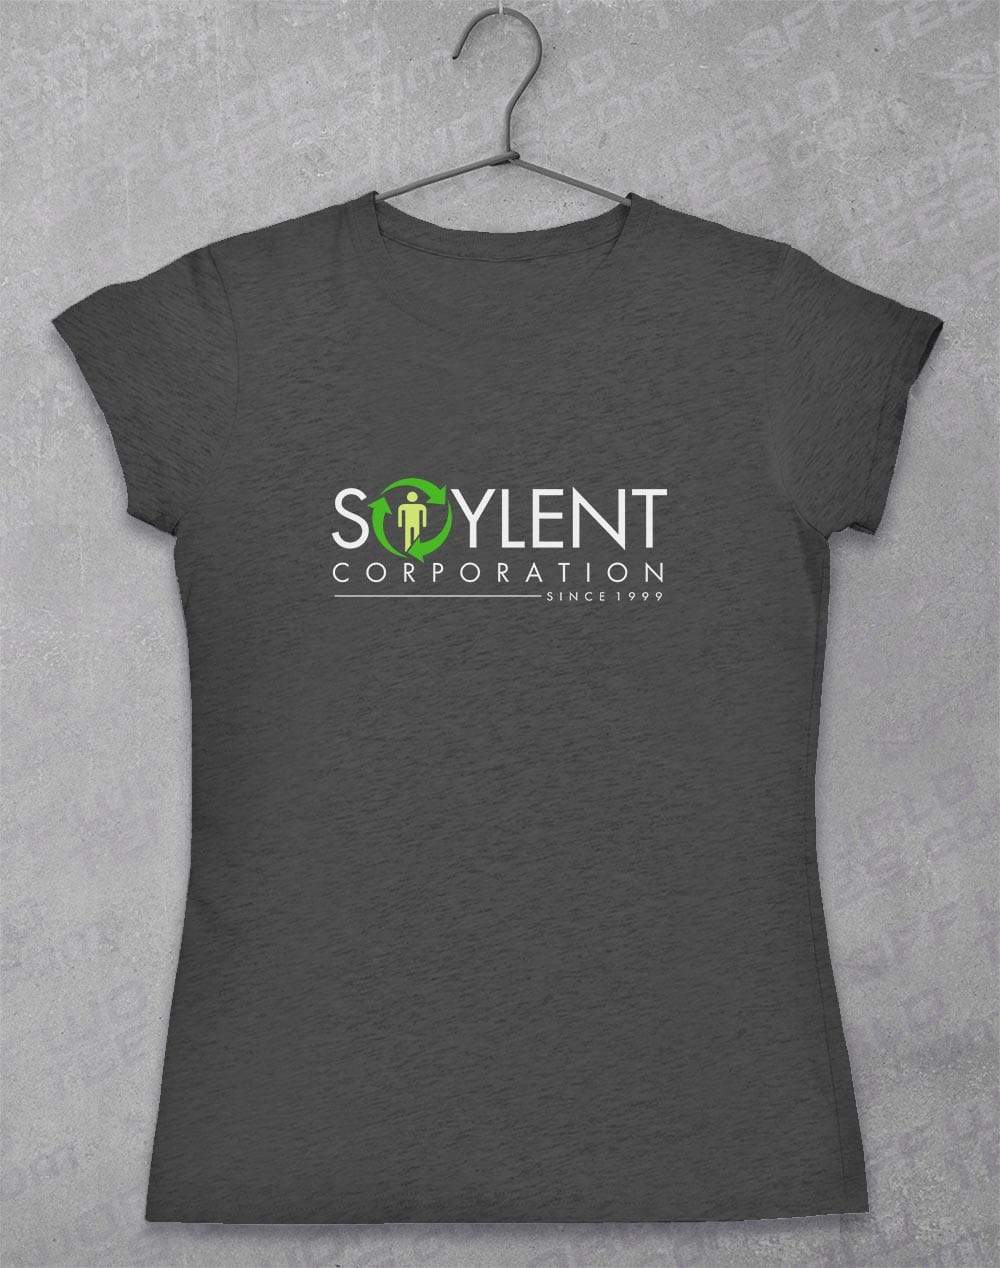 Soylent Corporation - Women's T-Shirt 8-10 / Dark Heather  - Off World Tees